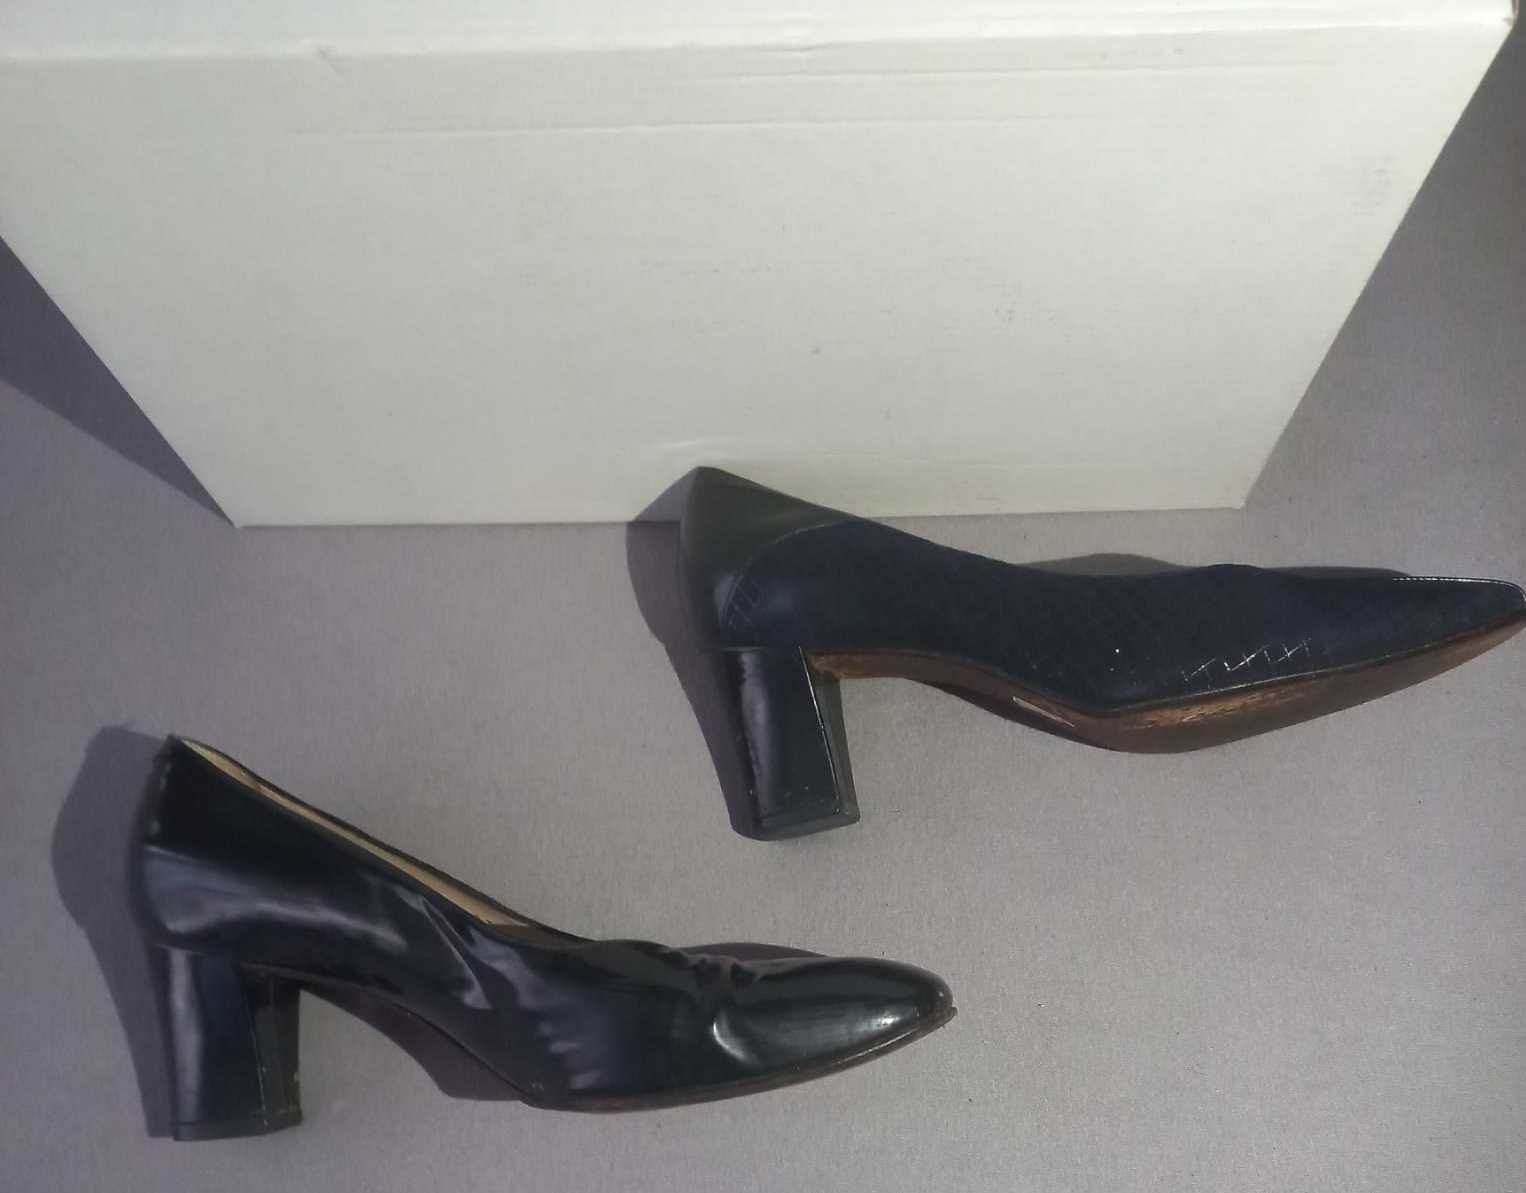 Pantofi pentru femei Mauro Teci, eleganti, negri, marimea 37 Ieftini!